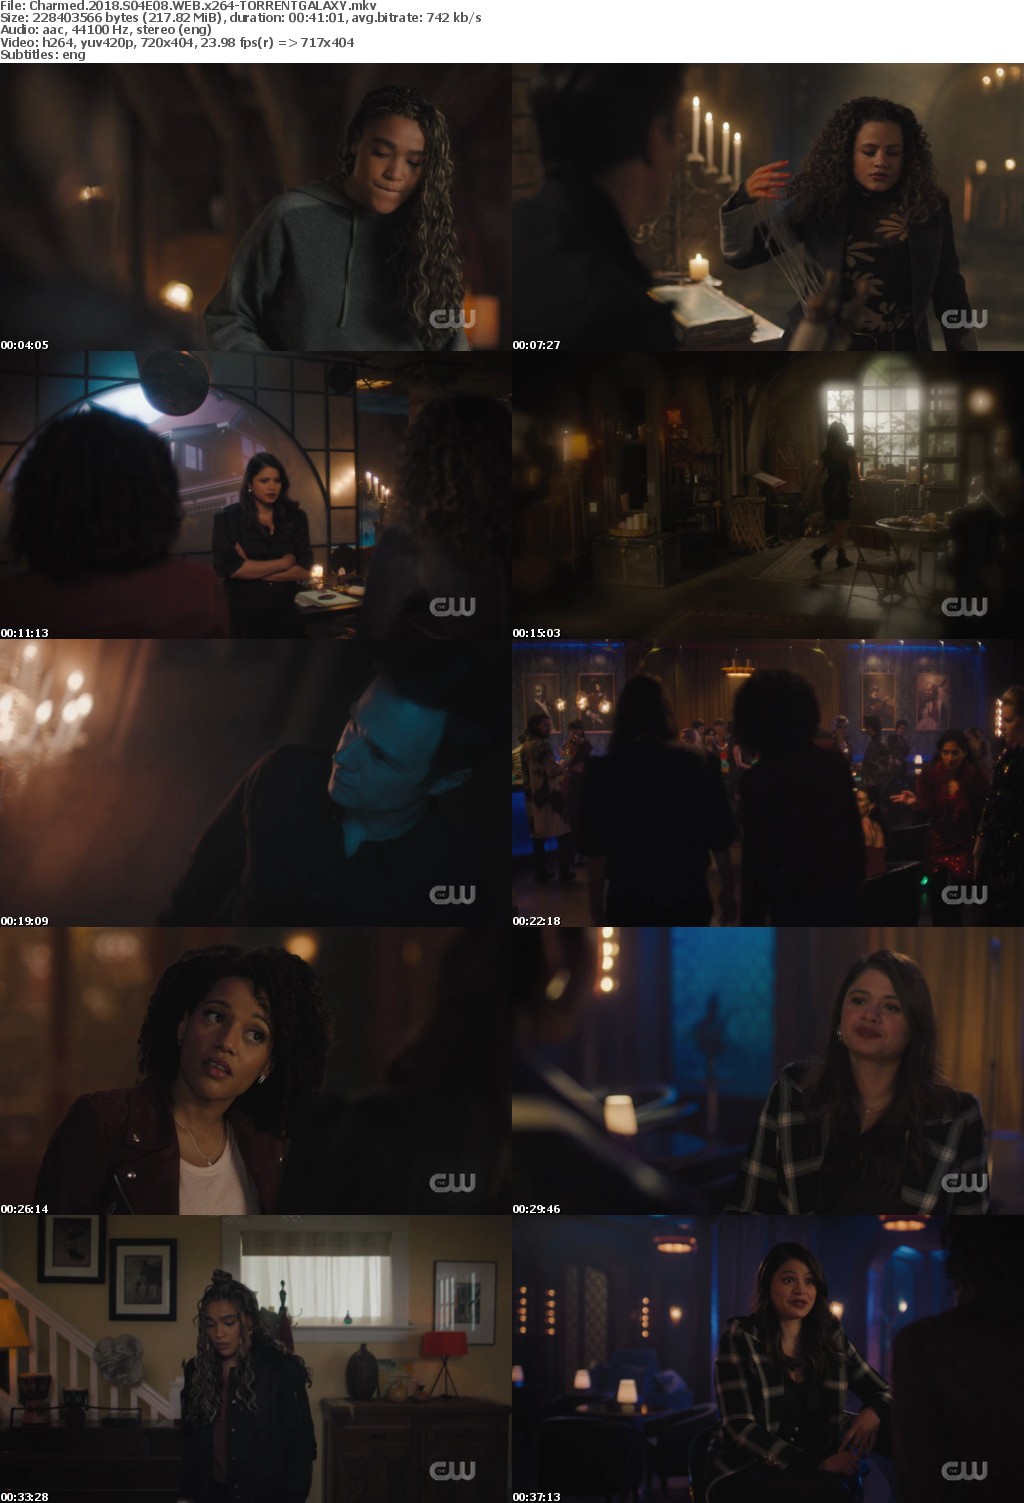 Charmed 2018 S04E08 WEB x264-GALAXY